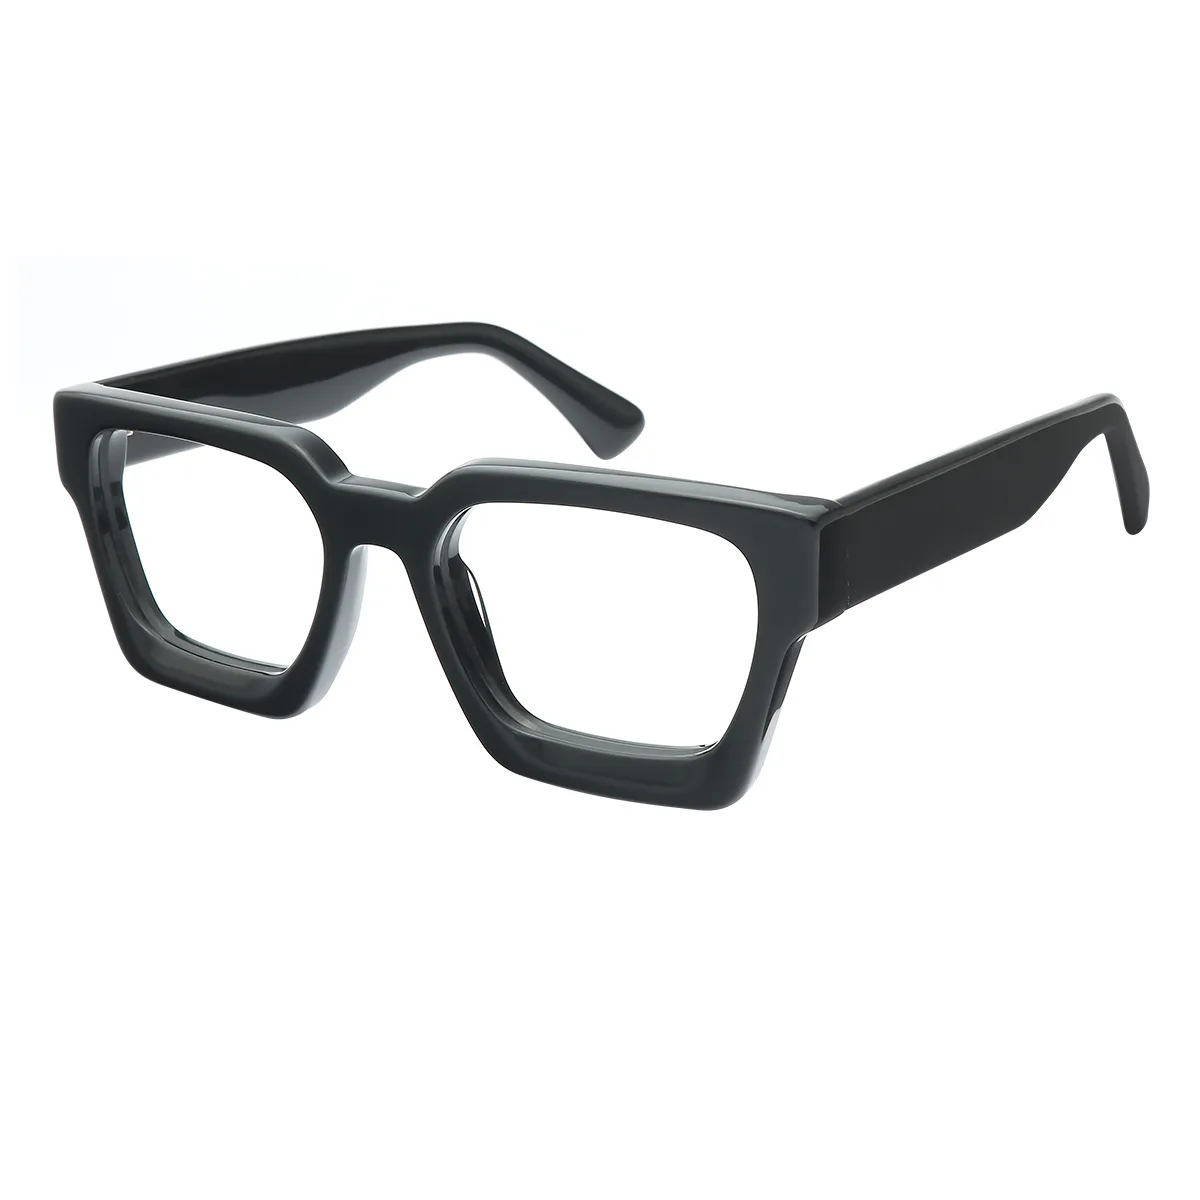 Granada - Square Black Glasses for Men & Women